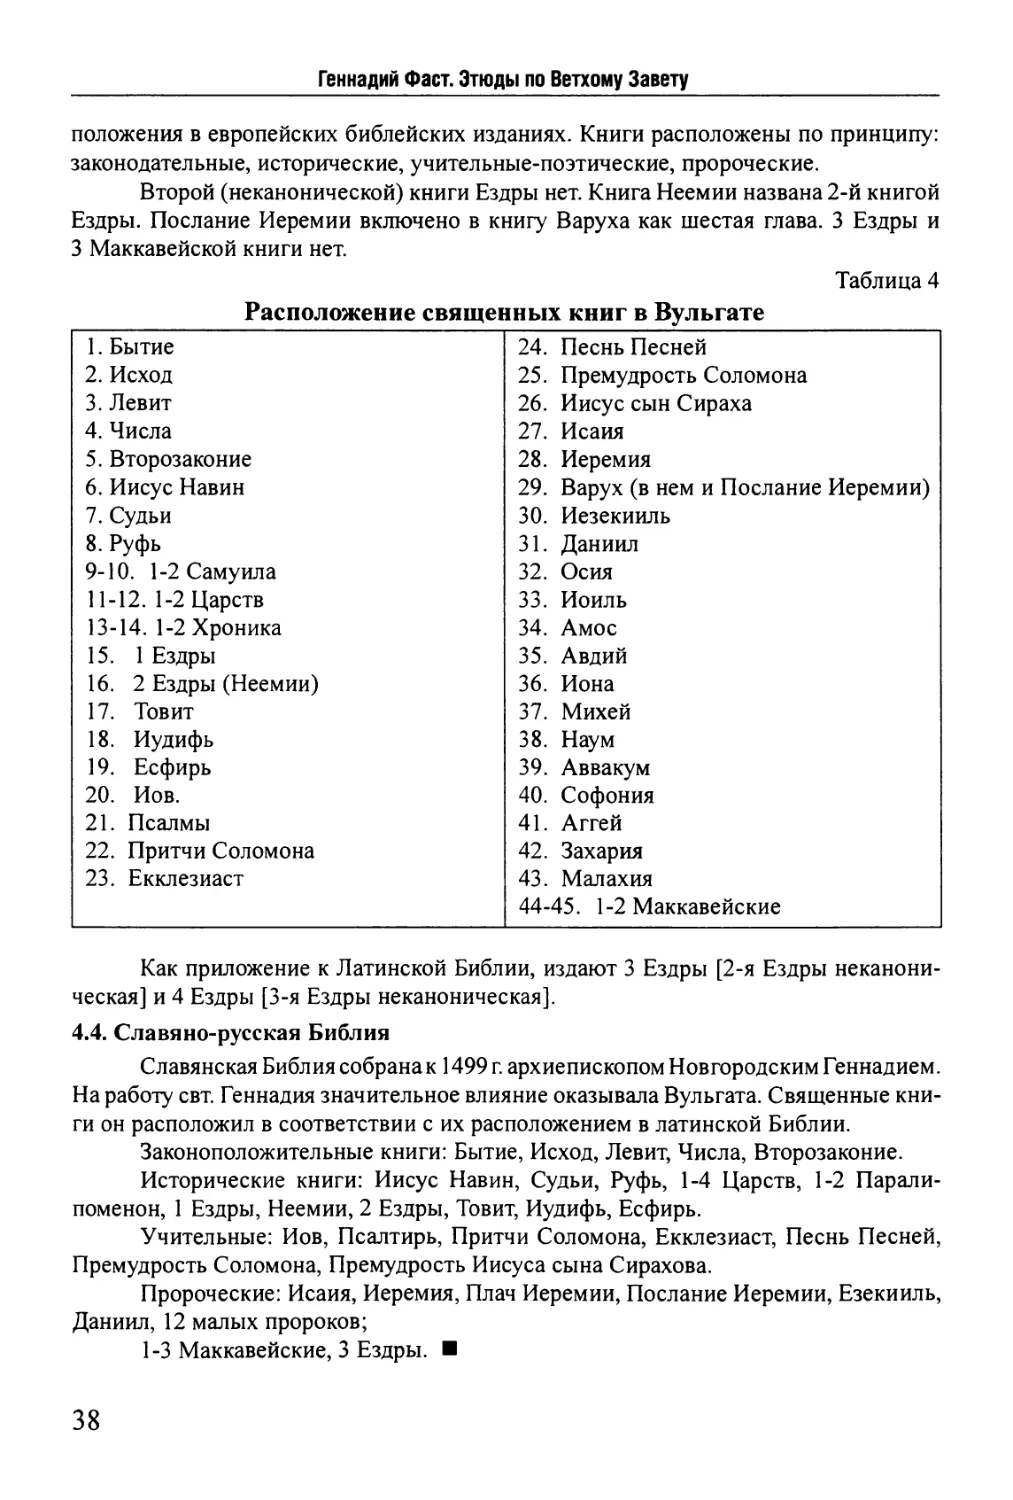 Славяно-русская Библия